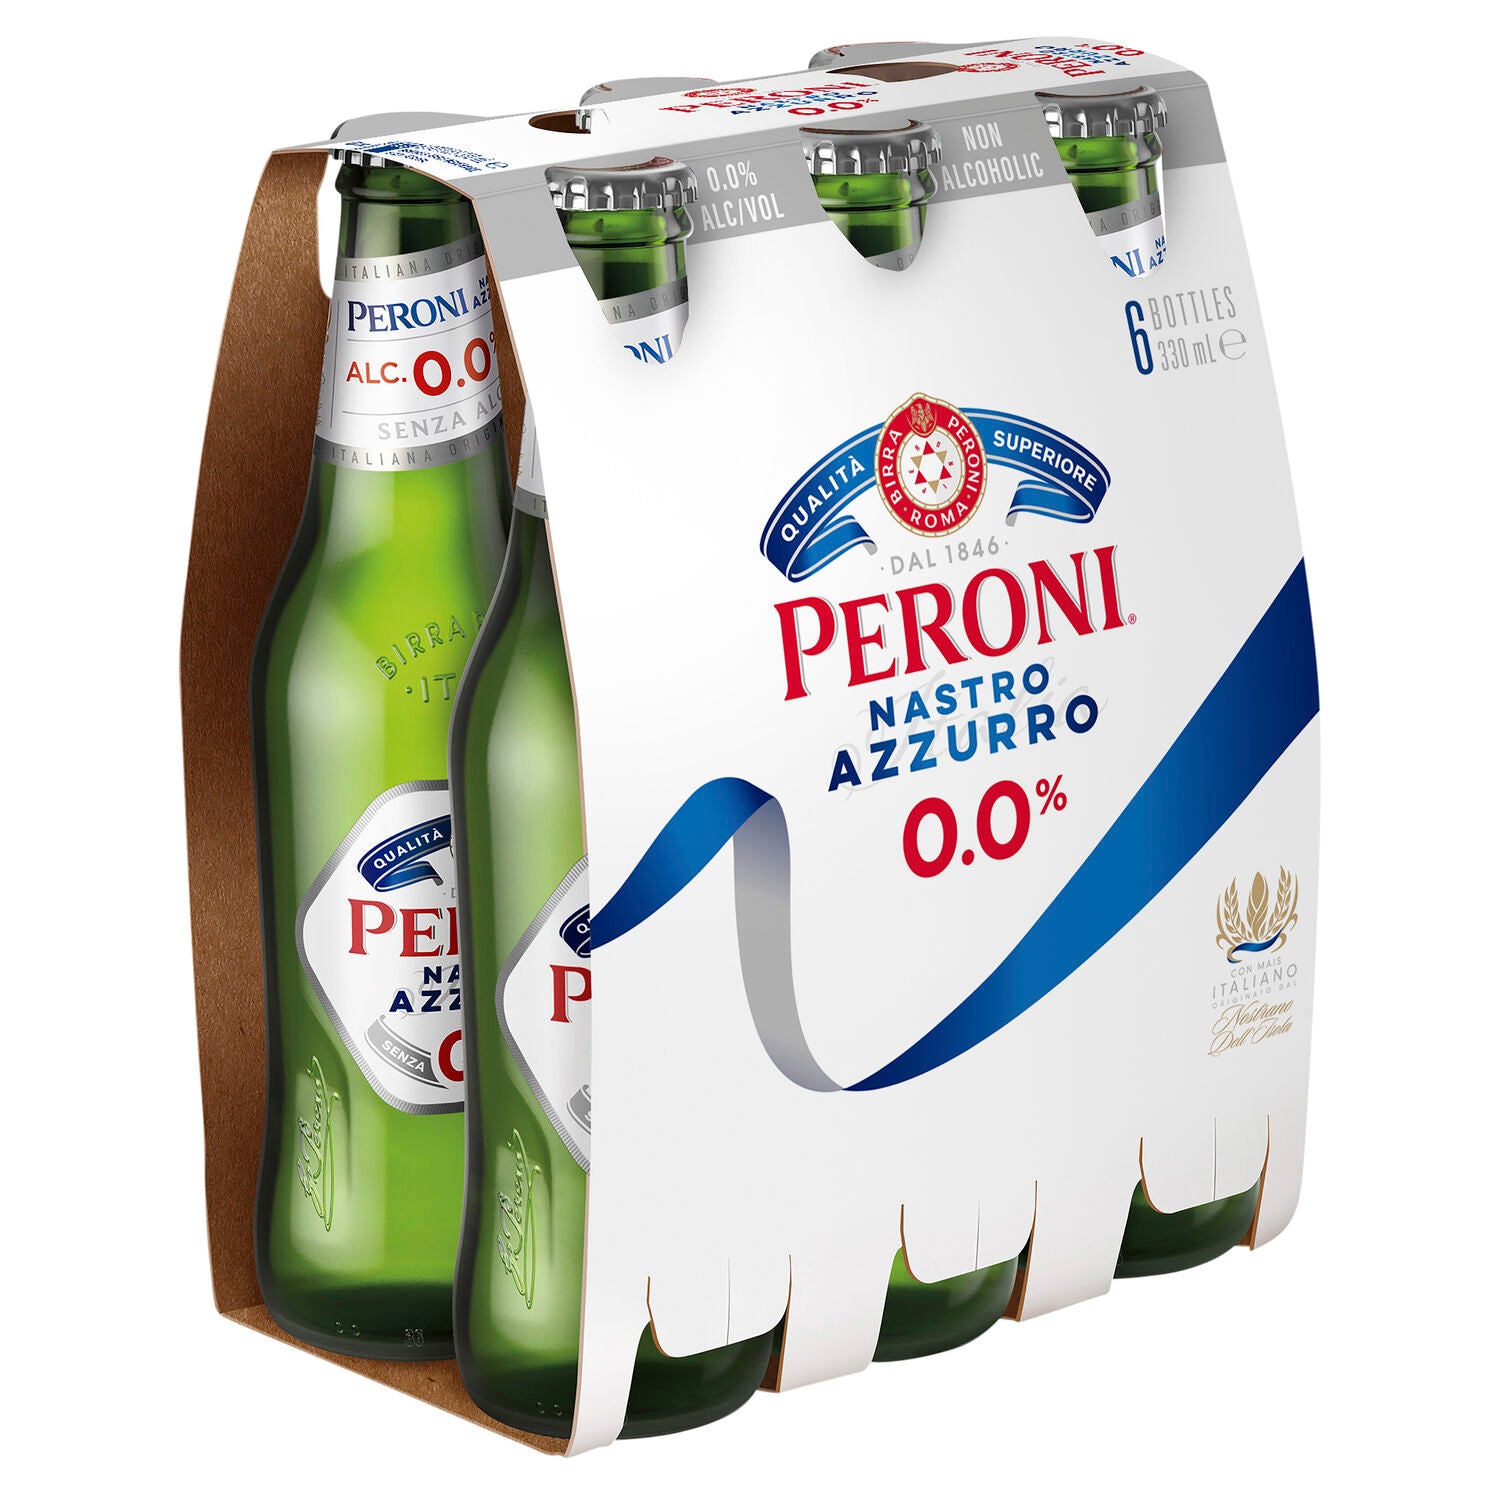 Peroni Nastro Azzurro 0.0% 330ml Bottle